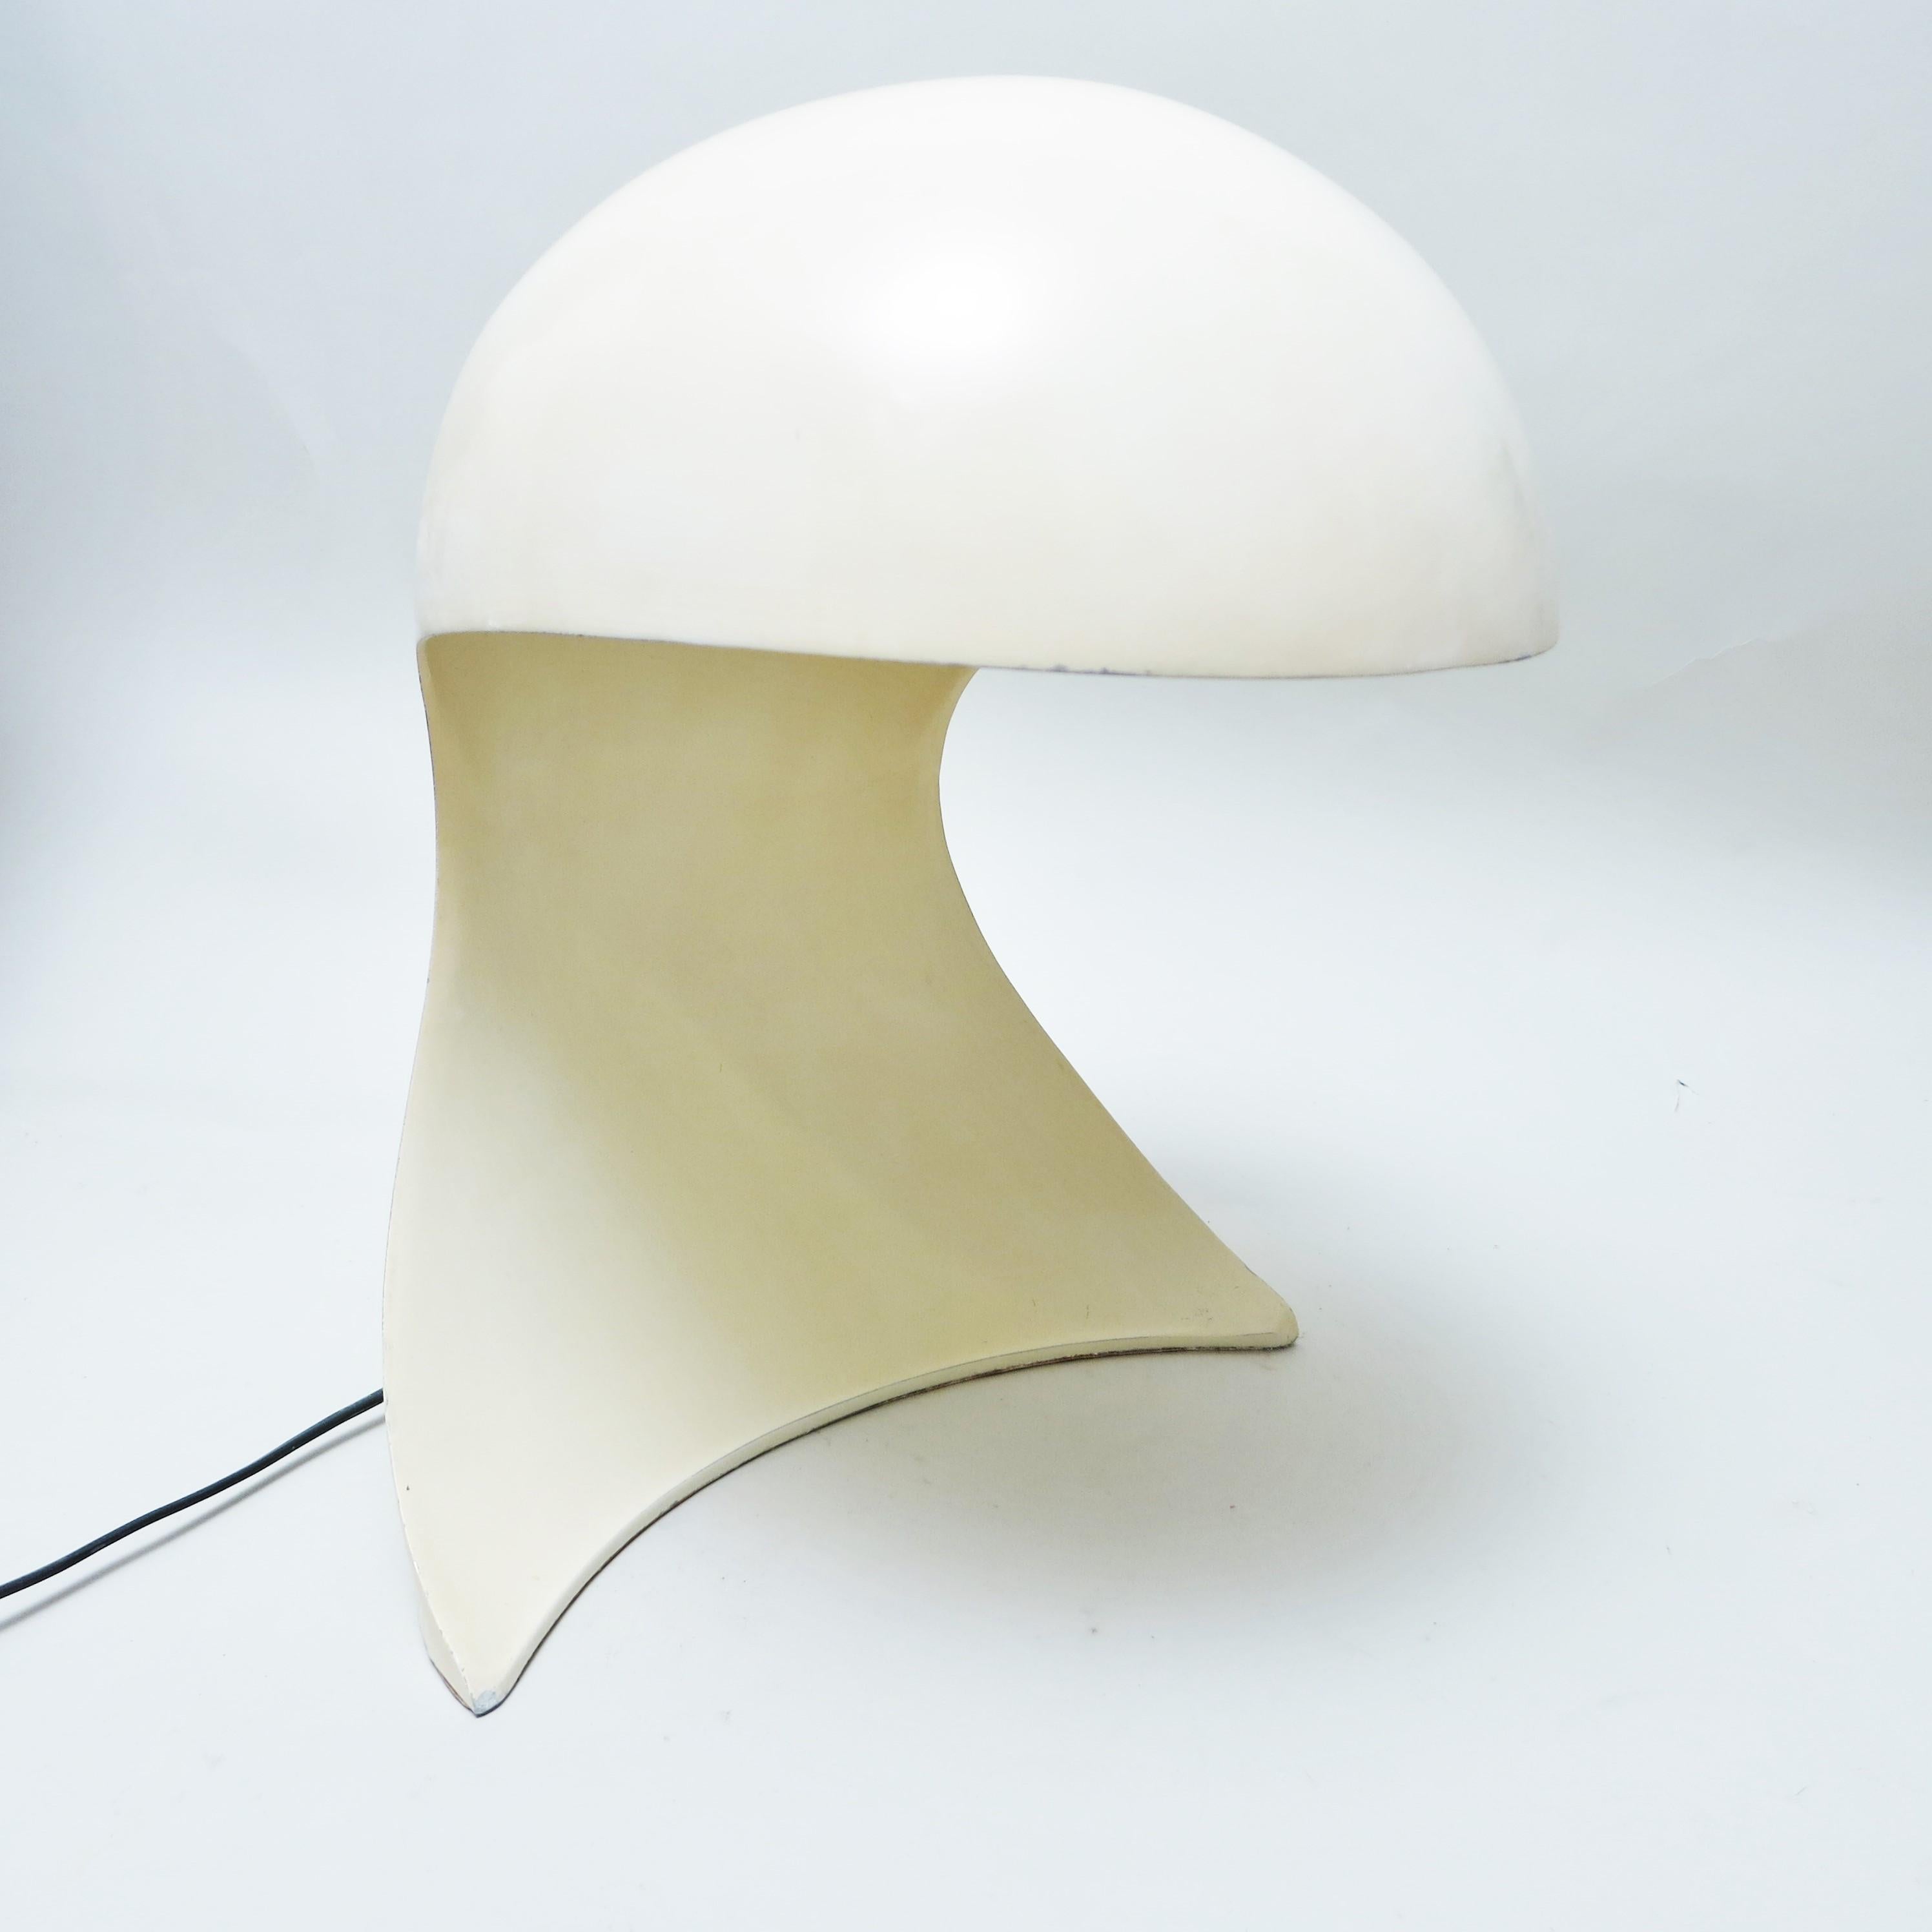 Rare and sculptural Dania table lamp designed by Dario Tognon with Studio Celli for Artemide in 1969 made of one heavy piece of aluminium cast lacquered white cream.